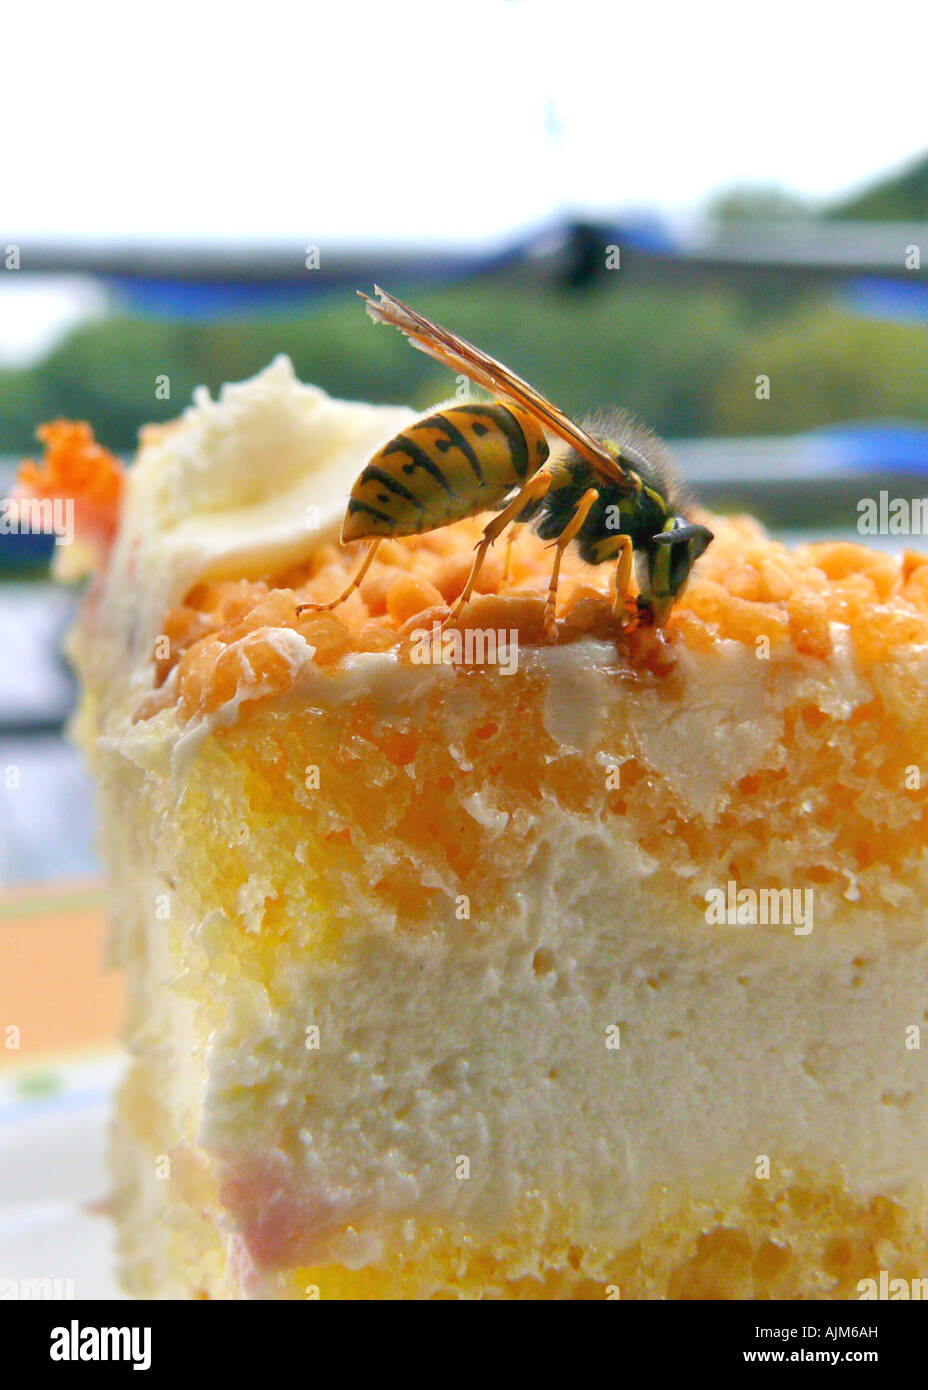 common wasp (Vespula vulgaris), on slice of the cake, Germany Stock Photo